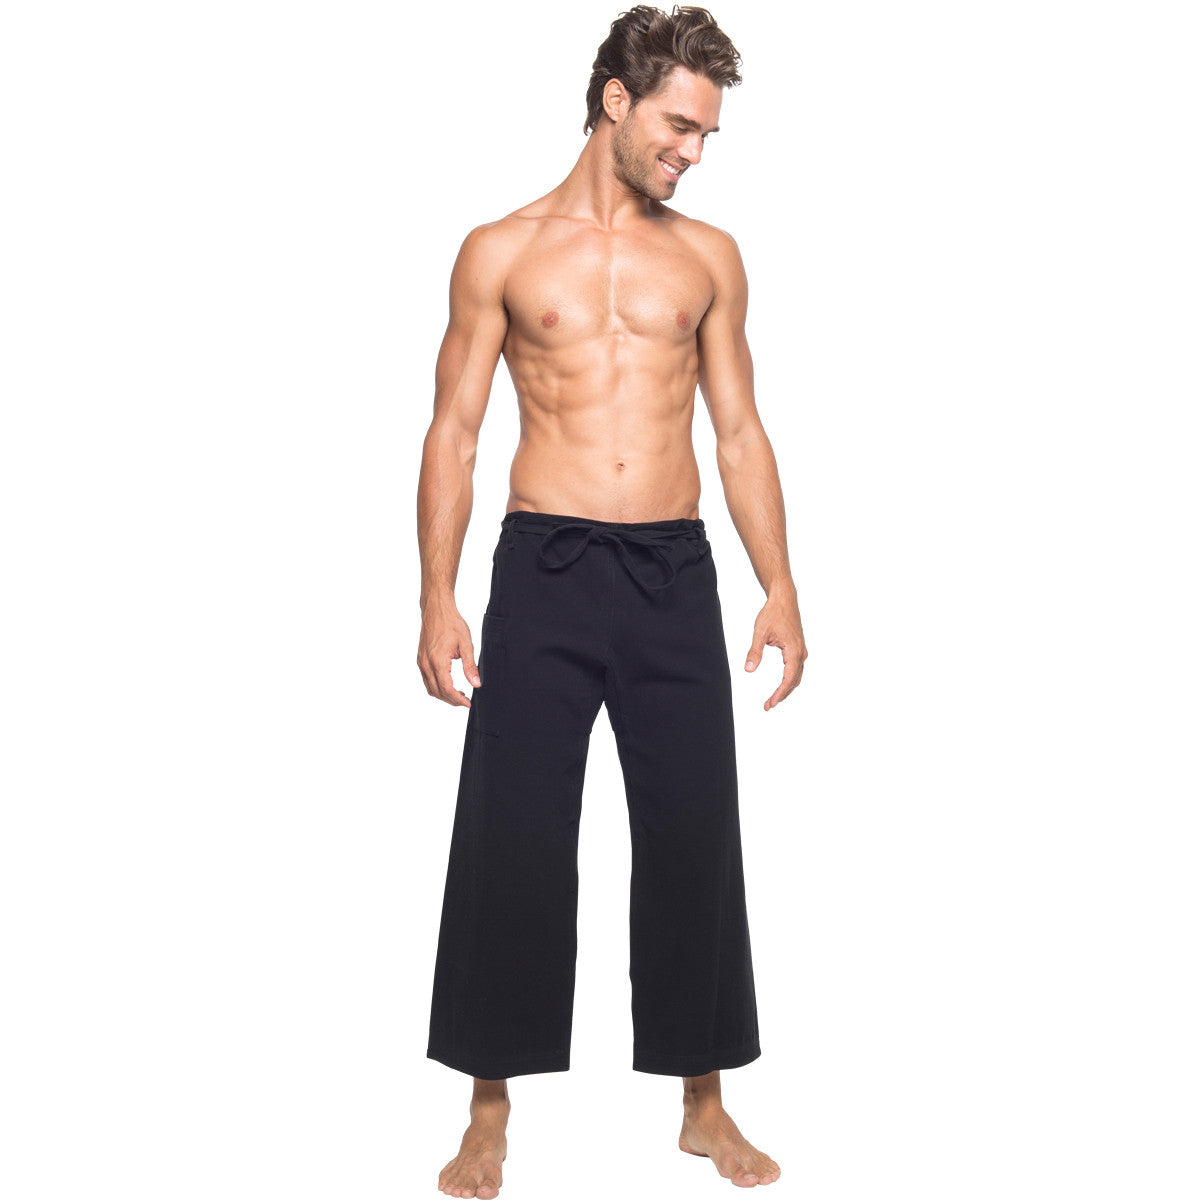 Men's Yoga Wear, Yoga Clothes for Men